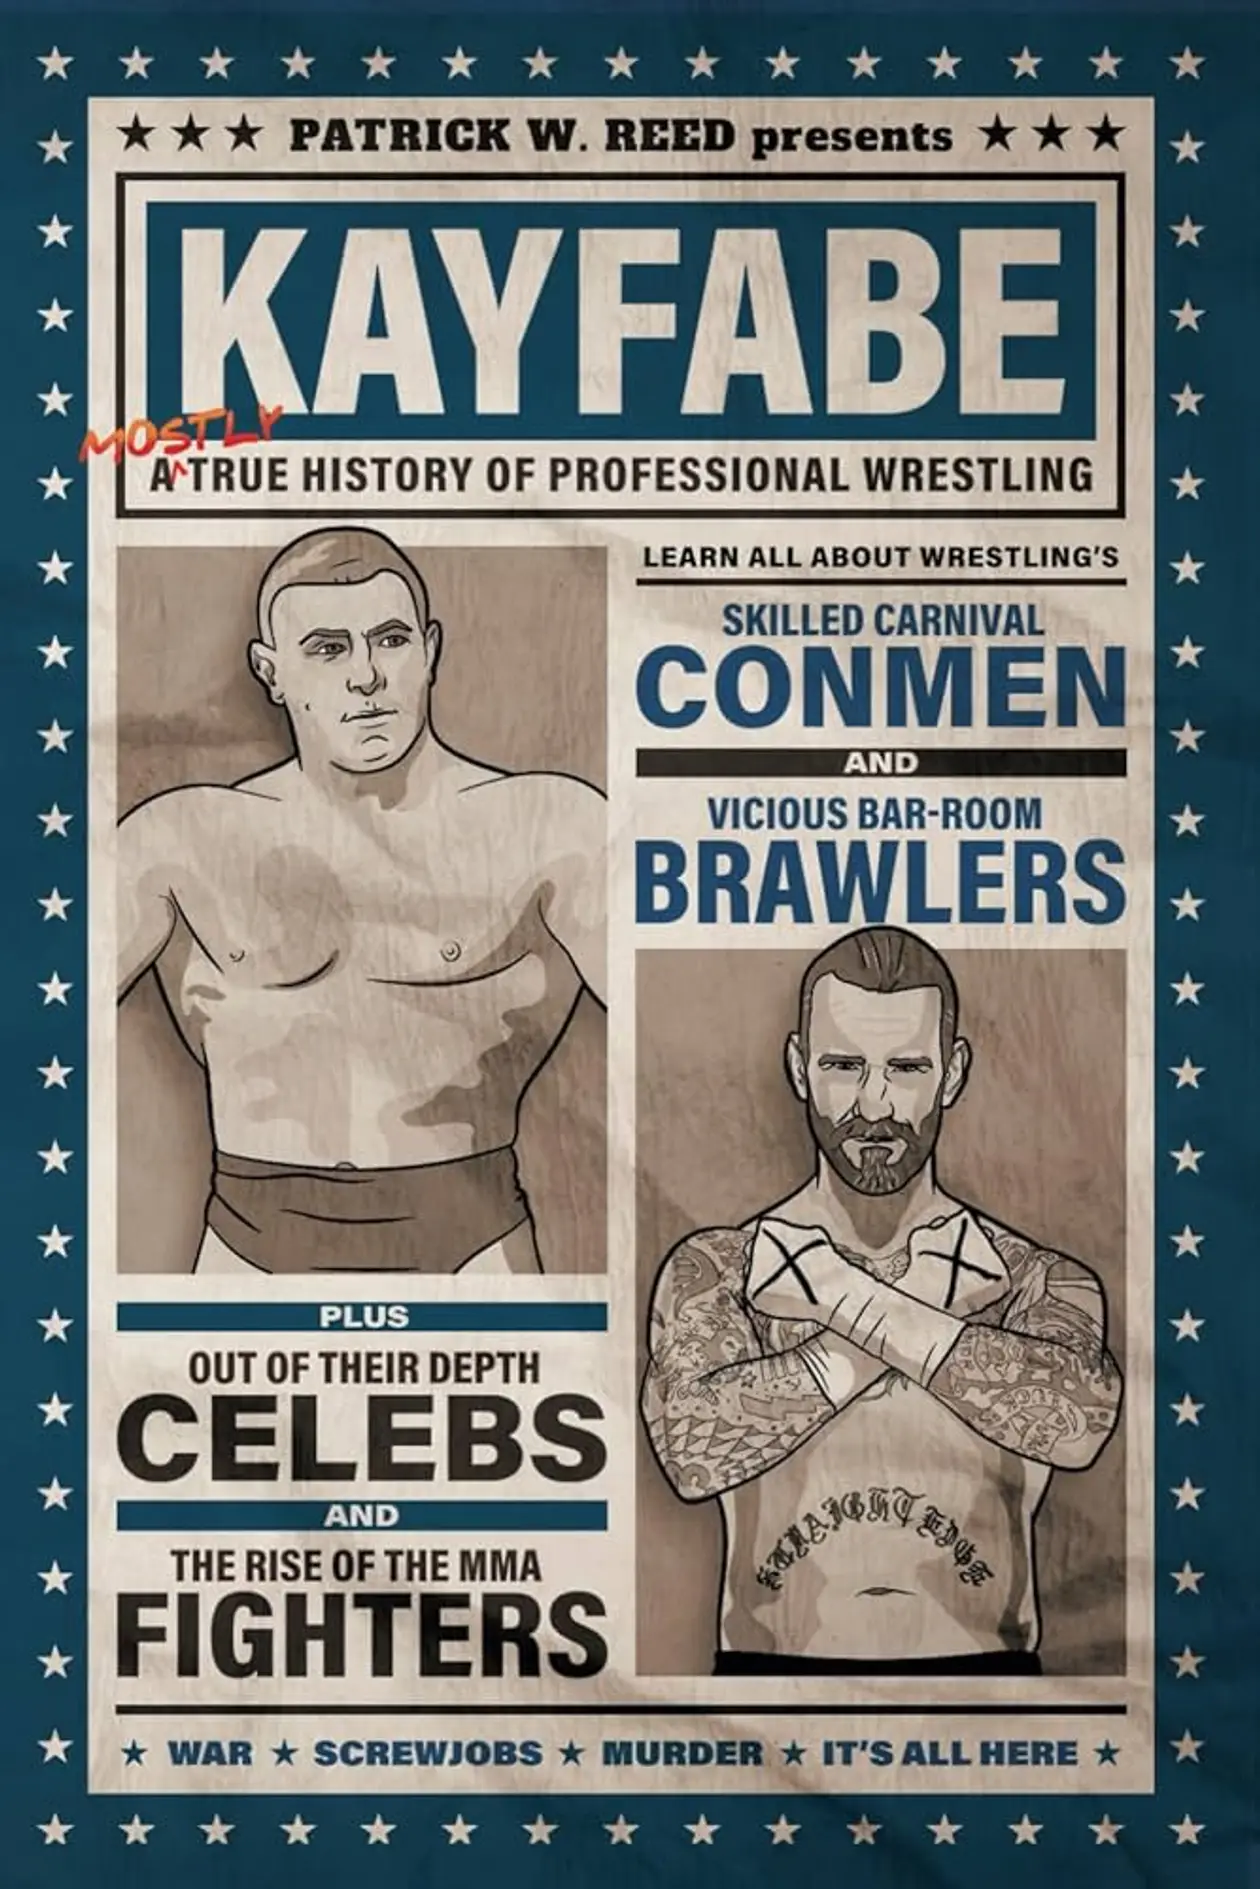 Що таке кейфеб в рестлінгу? Переклад книги Патріка Ріда — Kayfabe: Mostly True History of Professional Wrestling. Вступ